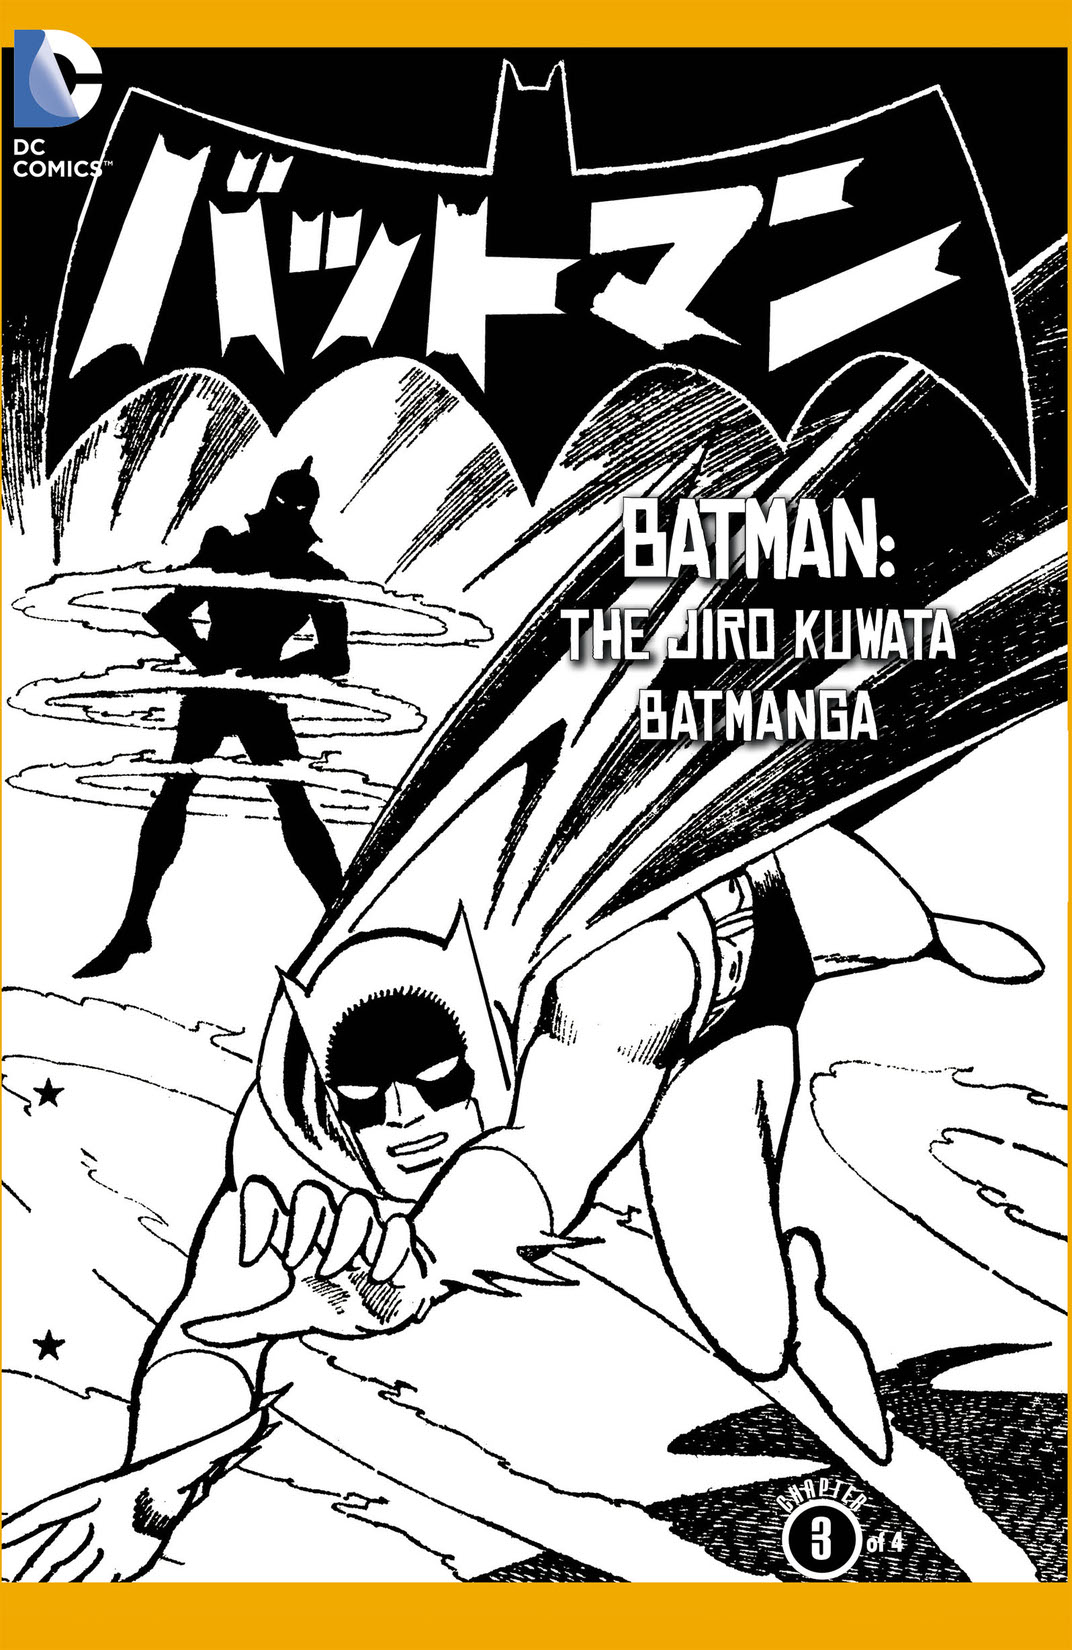 Batman: The Jiro Kuwata Batmanga #42 preview images